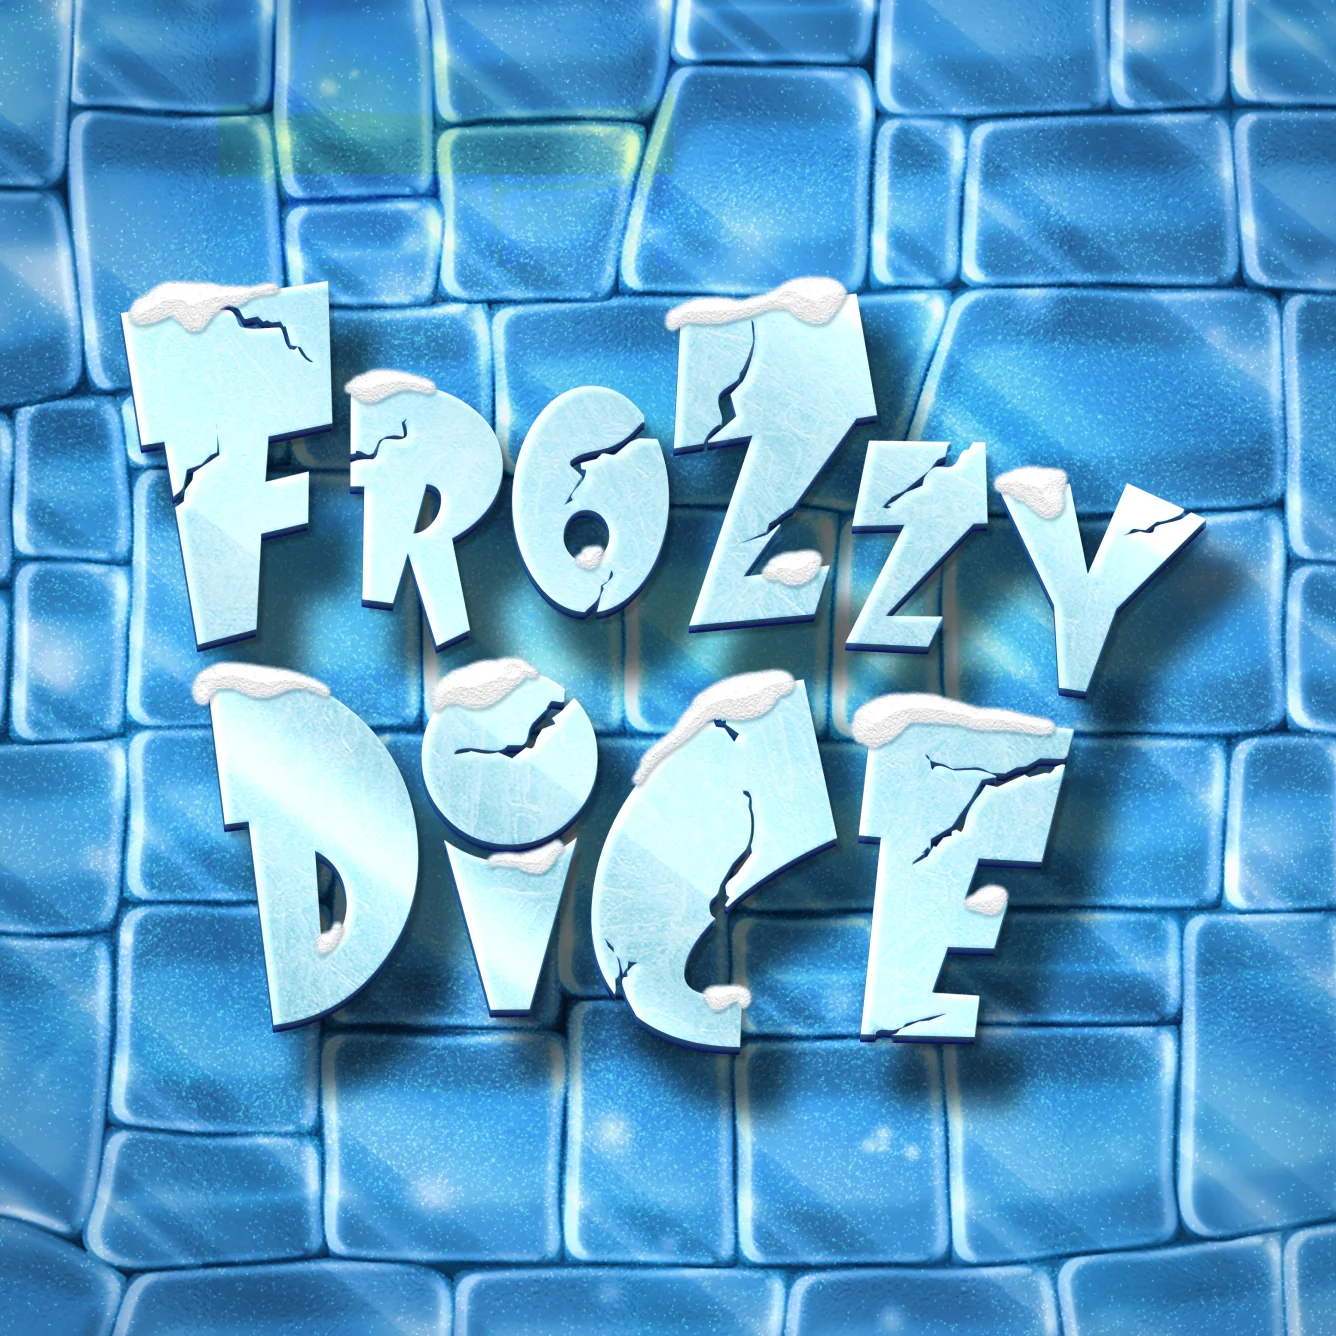 Play Frozzy Dice on Starcasinodice.be online casino